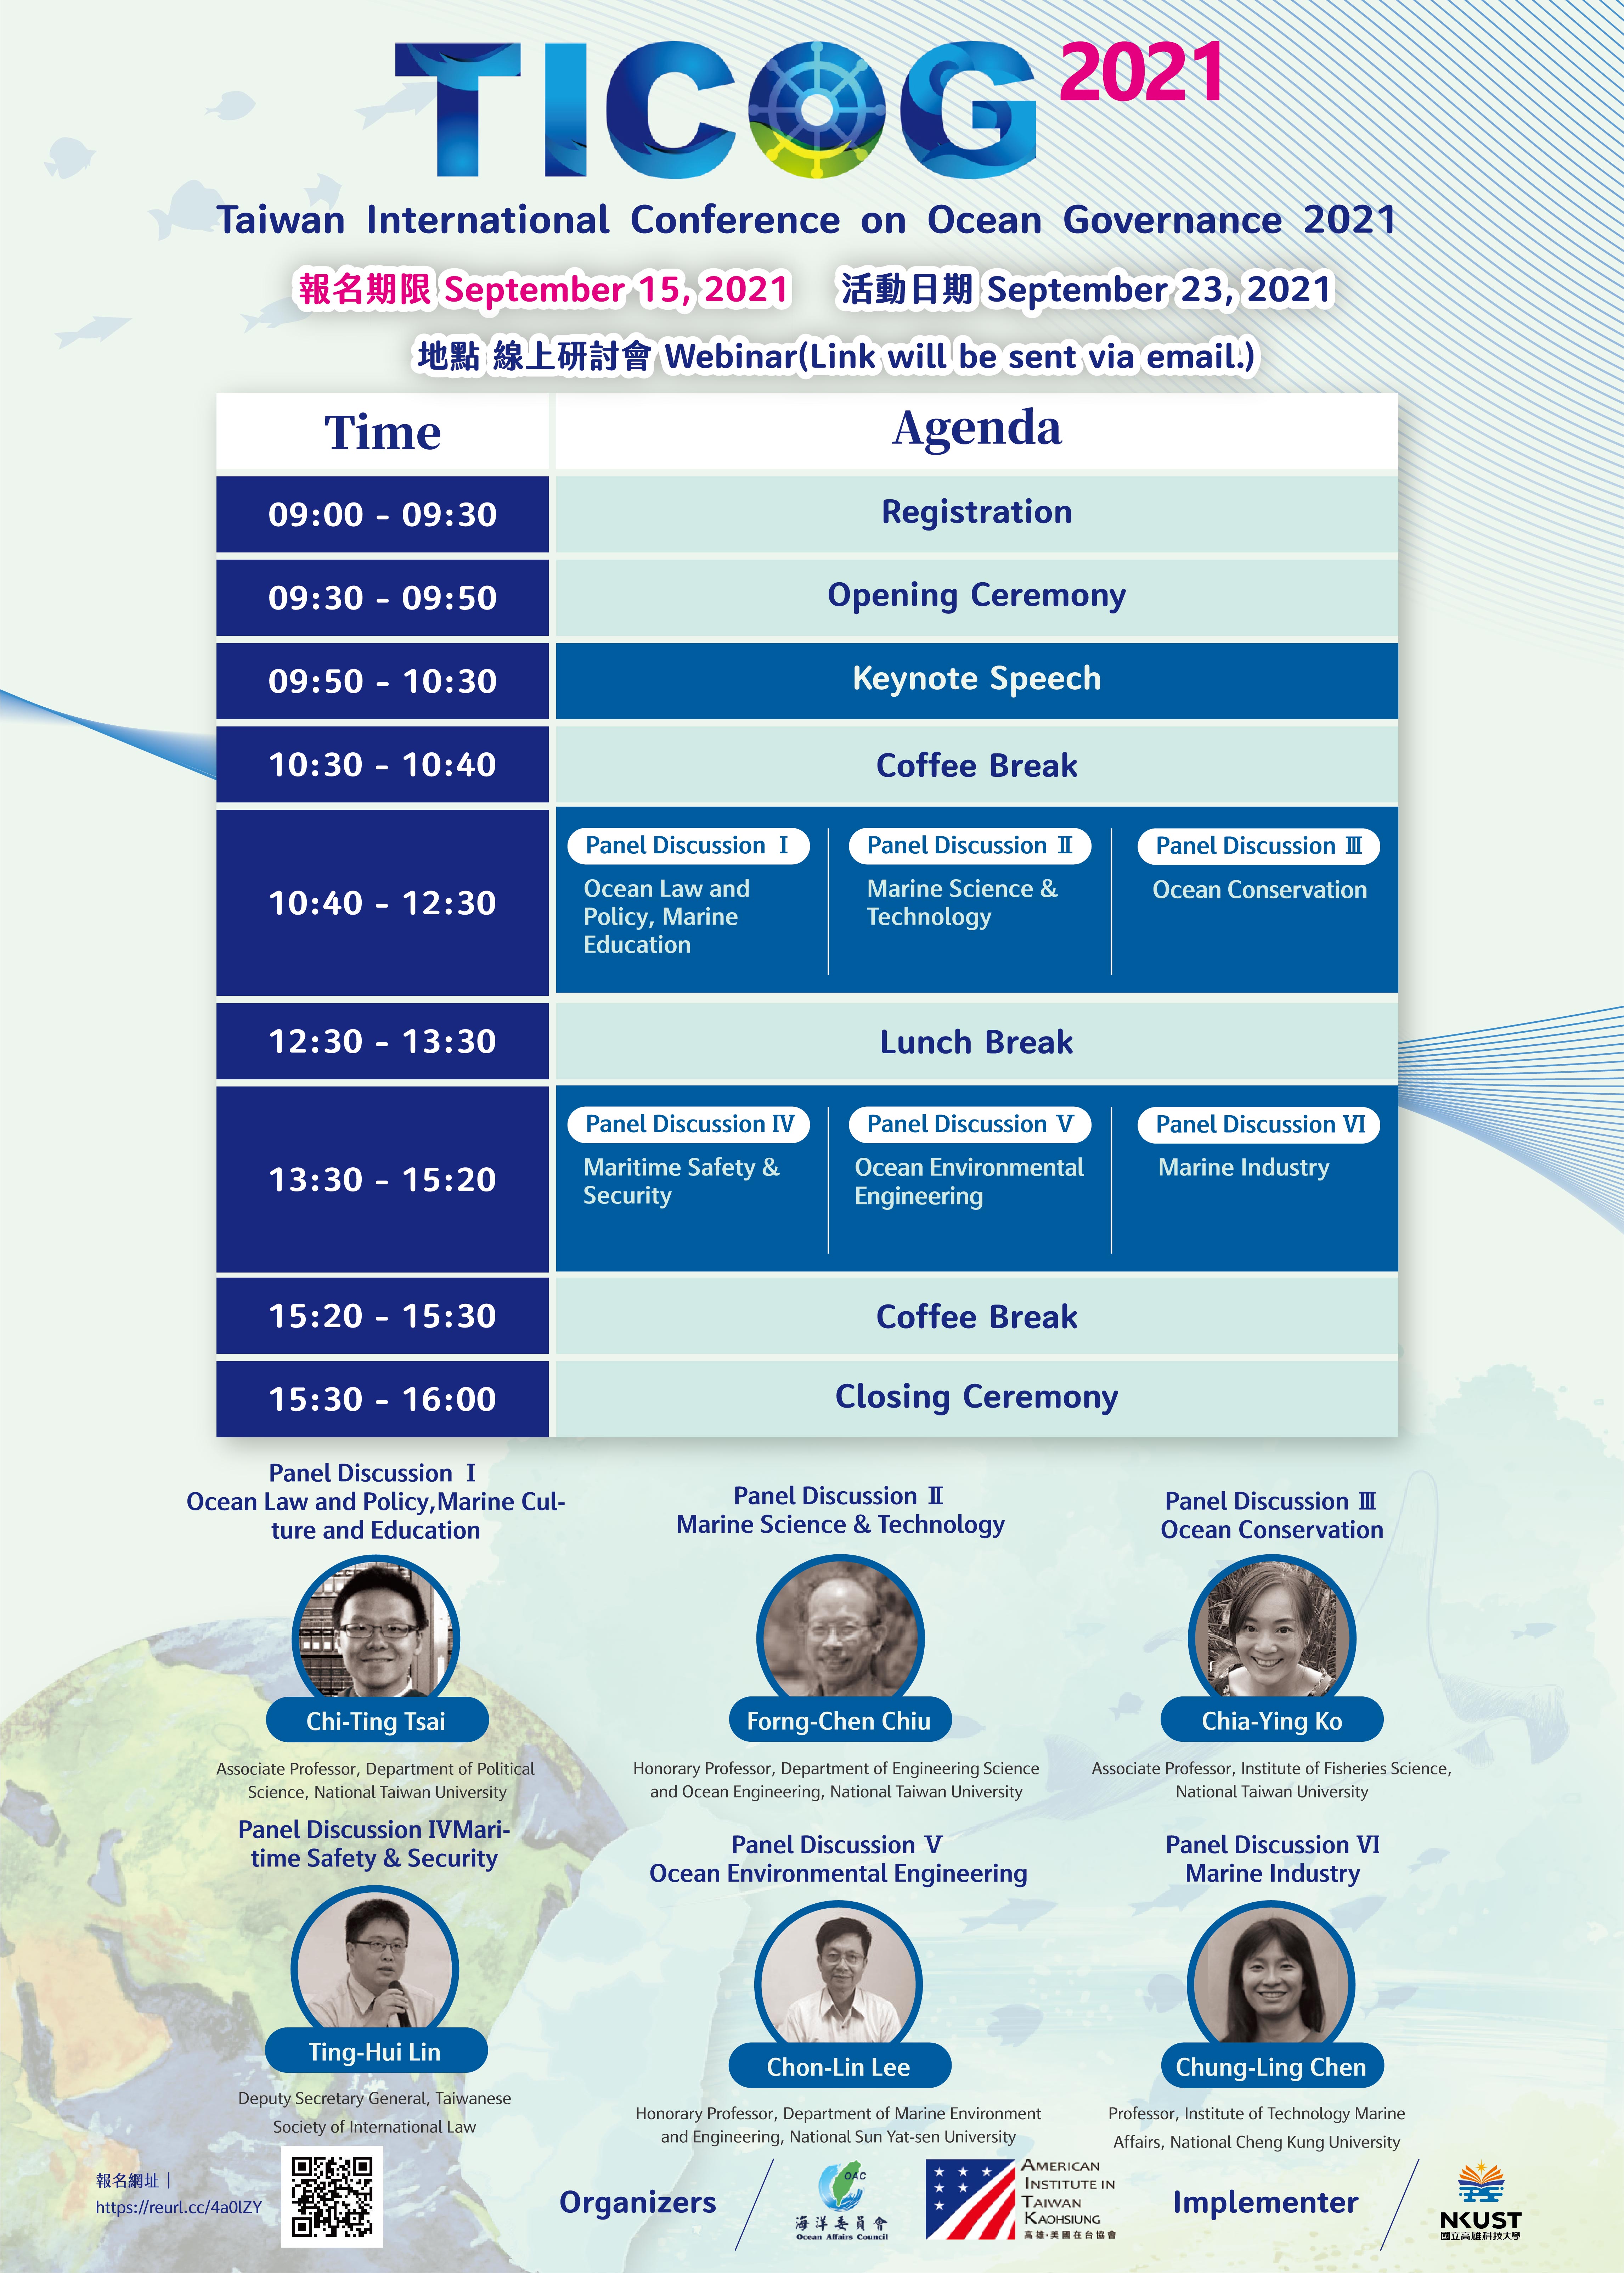 Taiwan International Conference on Ocean Governance 2021 Agenda